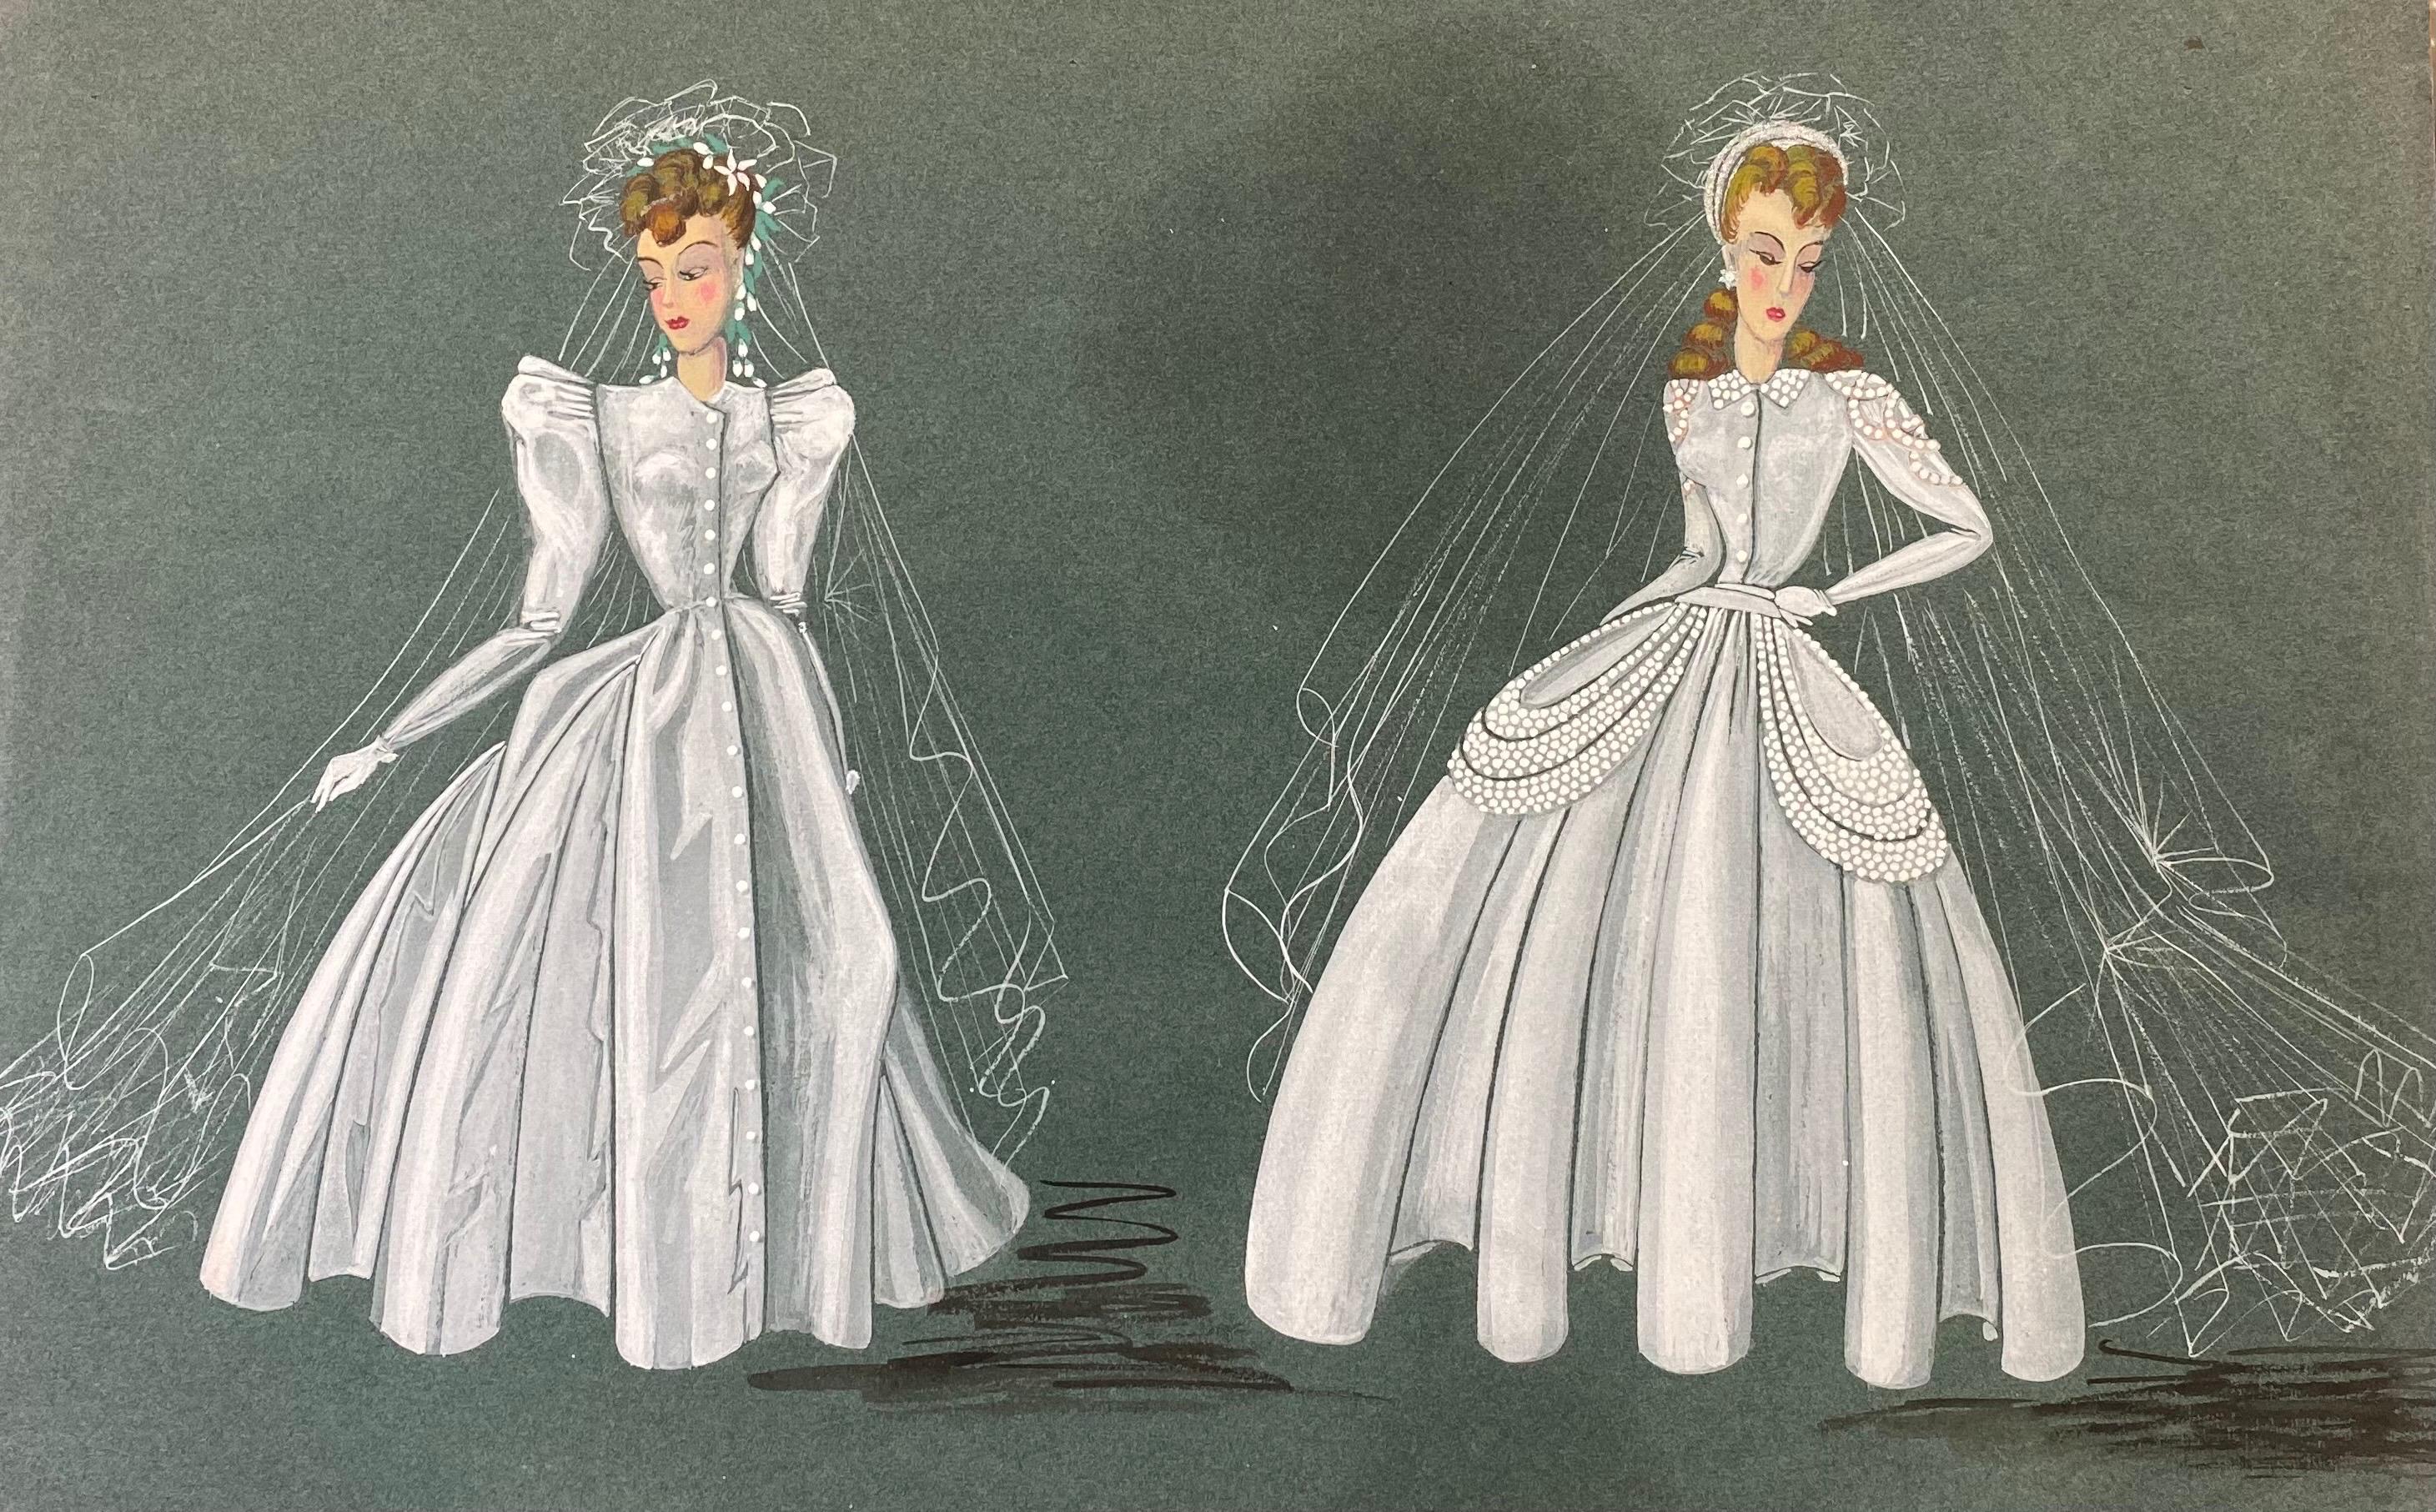 Geneviève Thomas Portrait Painting - 1940's Fashion Illustration - The Two Elegant Brides